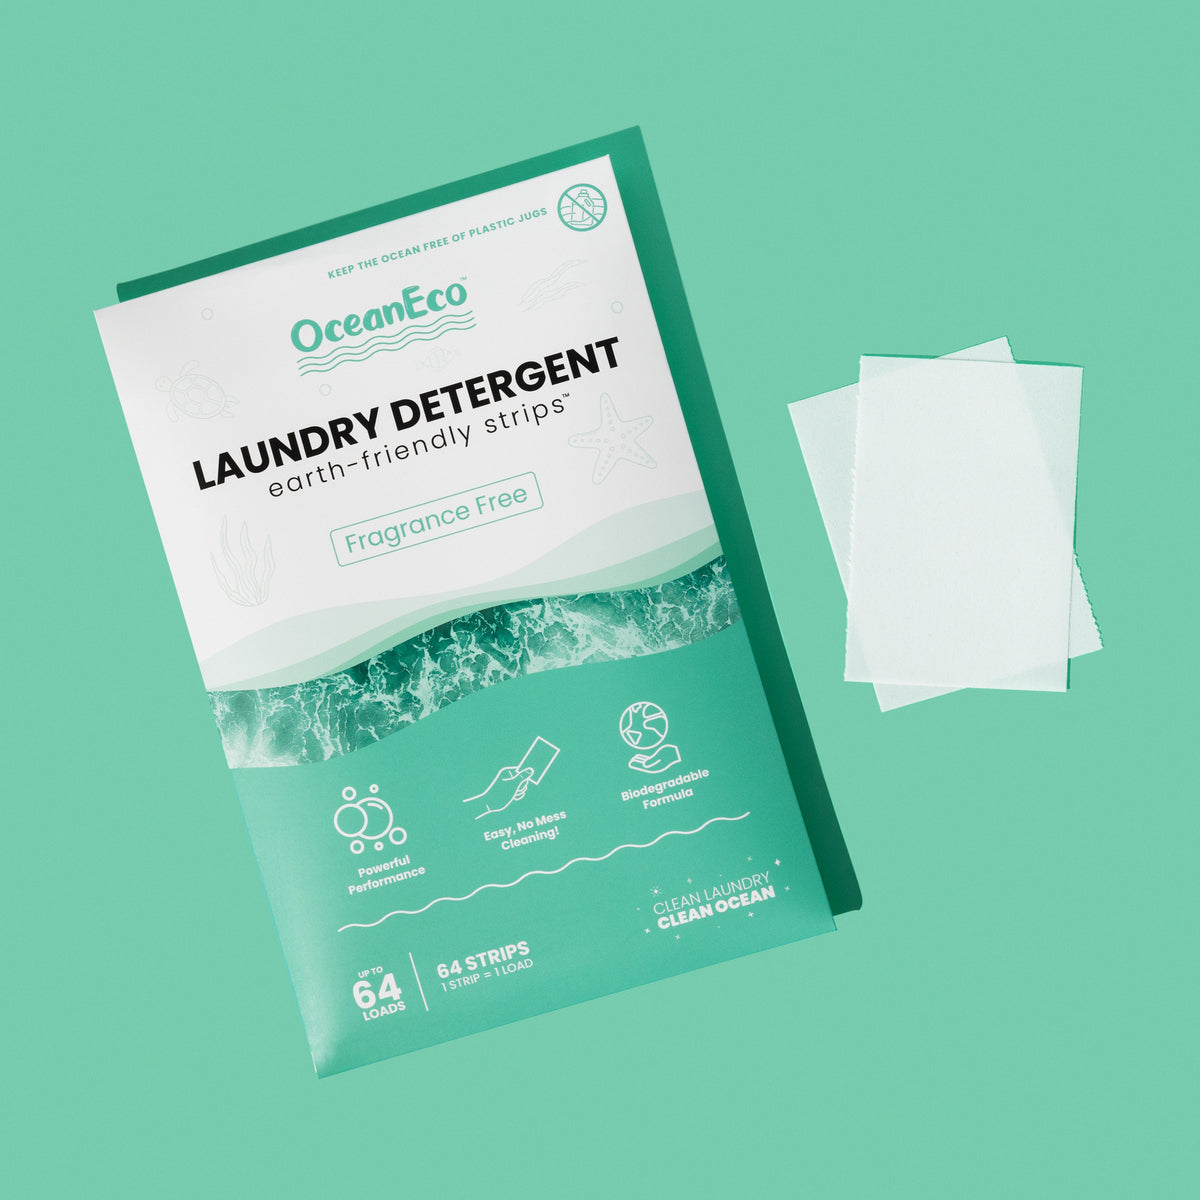 Laundry Detergent Earth-Friendly Strips - 64 Loads